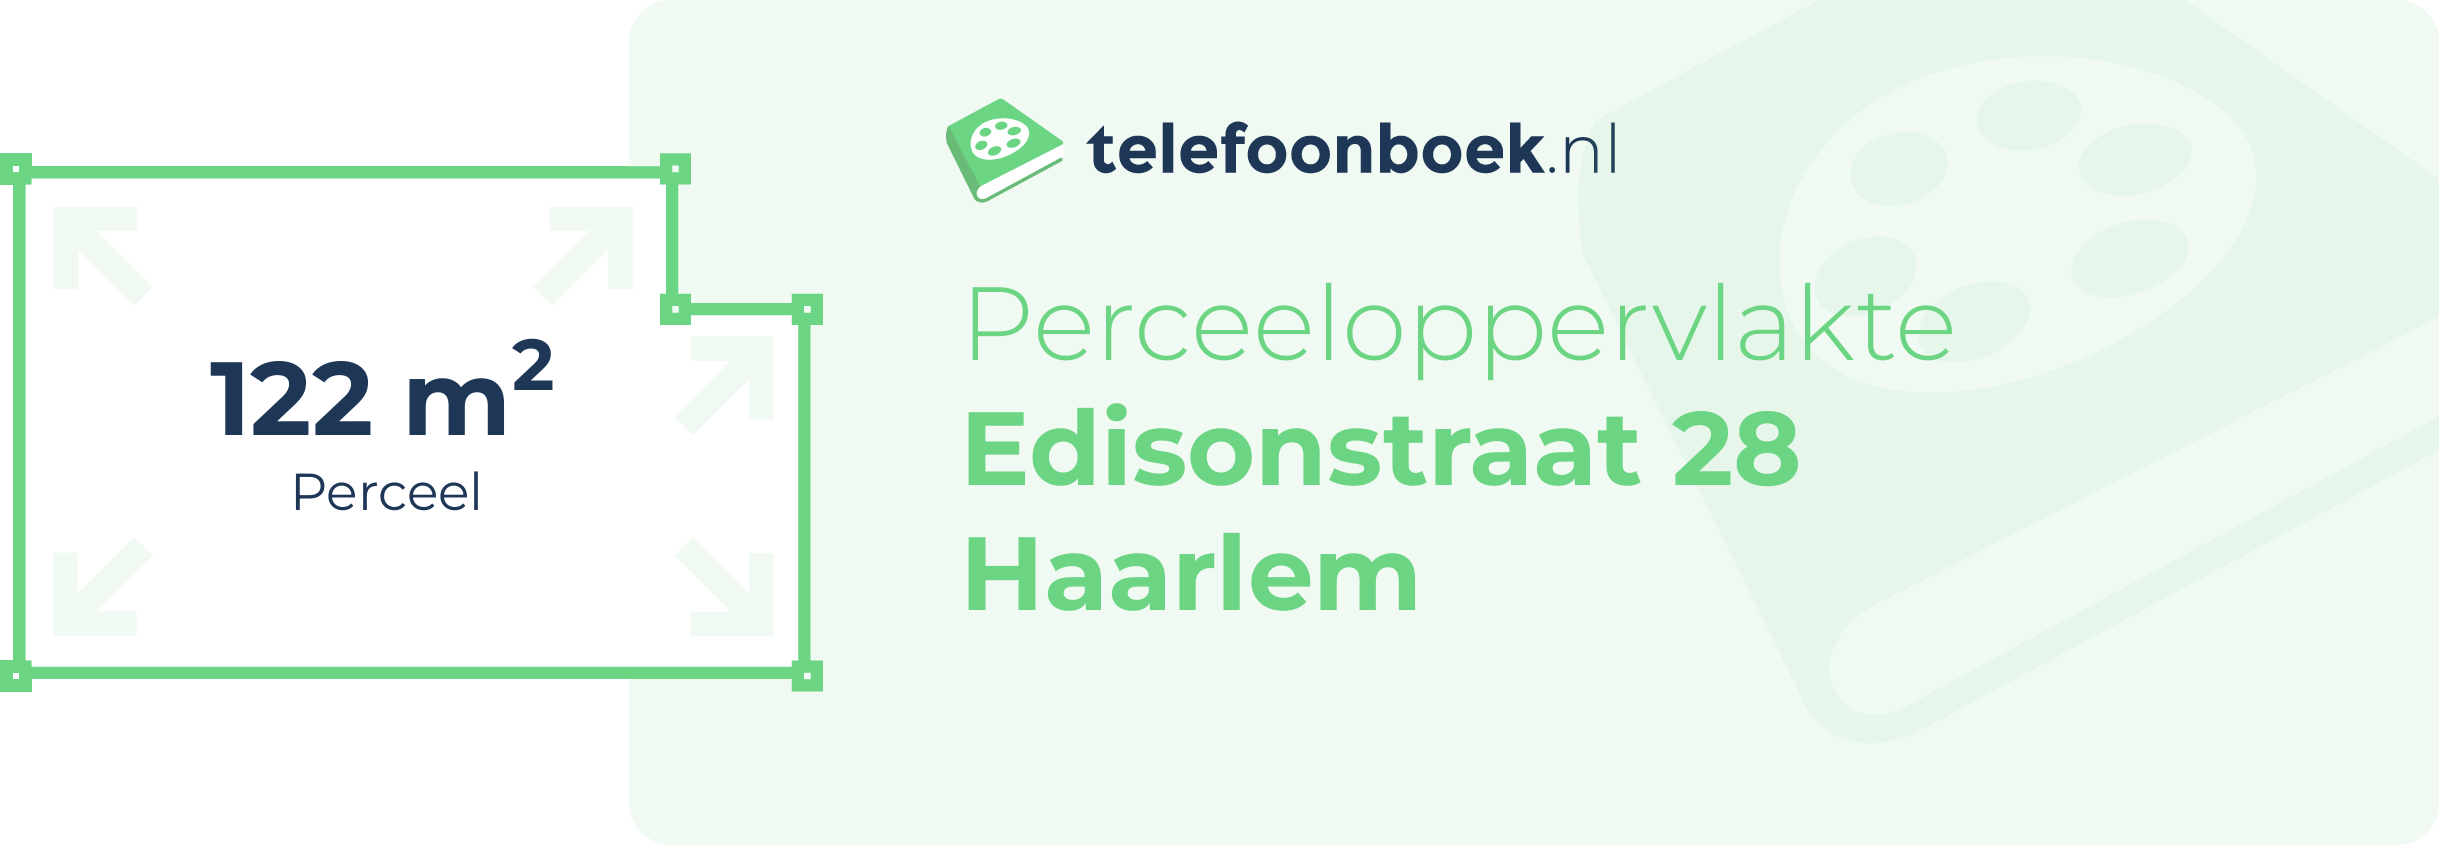 Perceeloppervlakte Edisonstraat 28 Haarlem